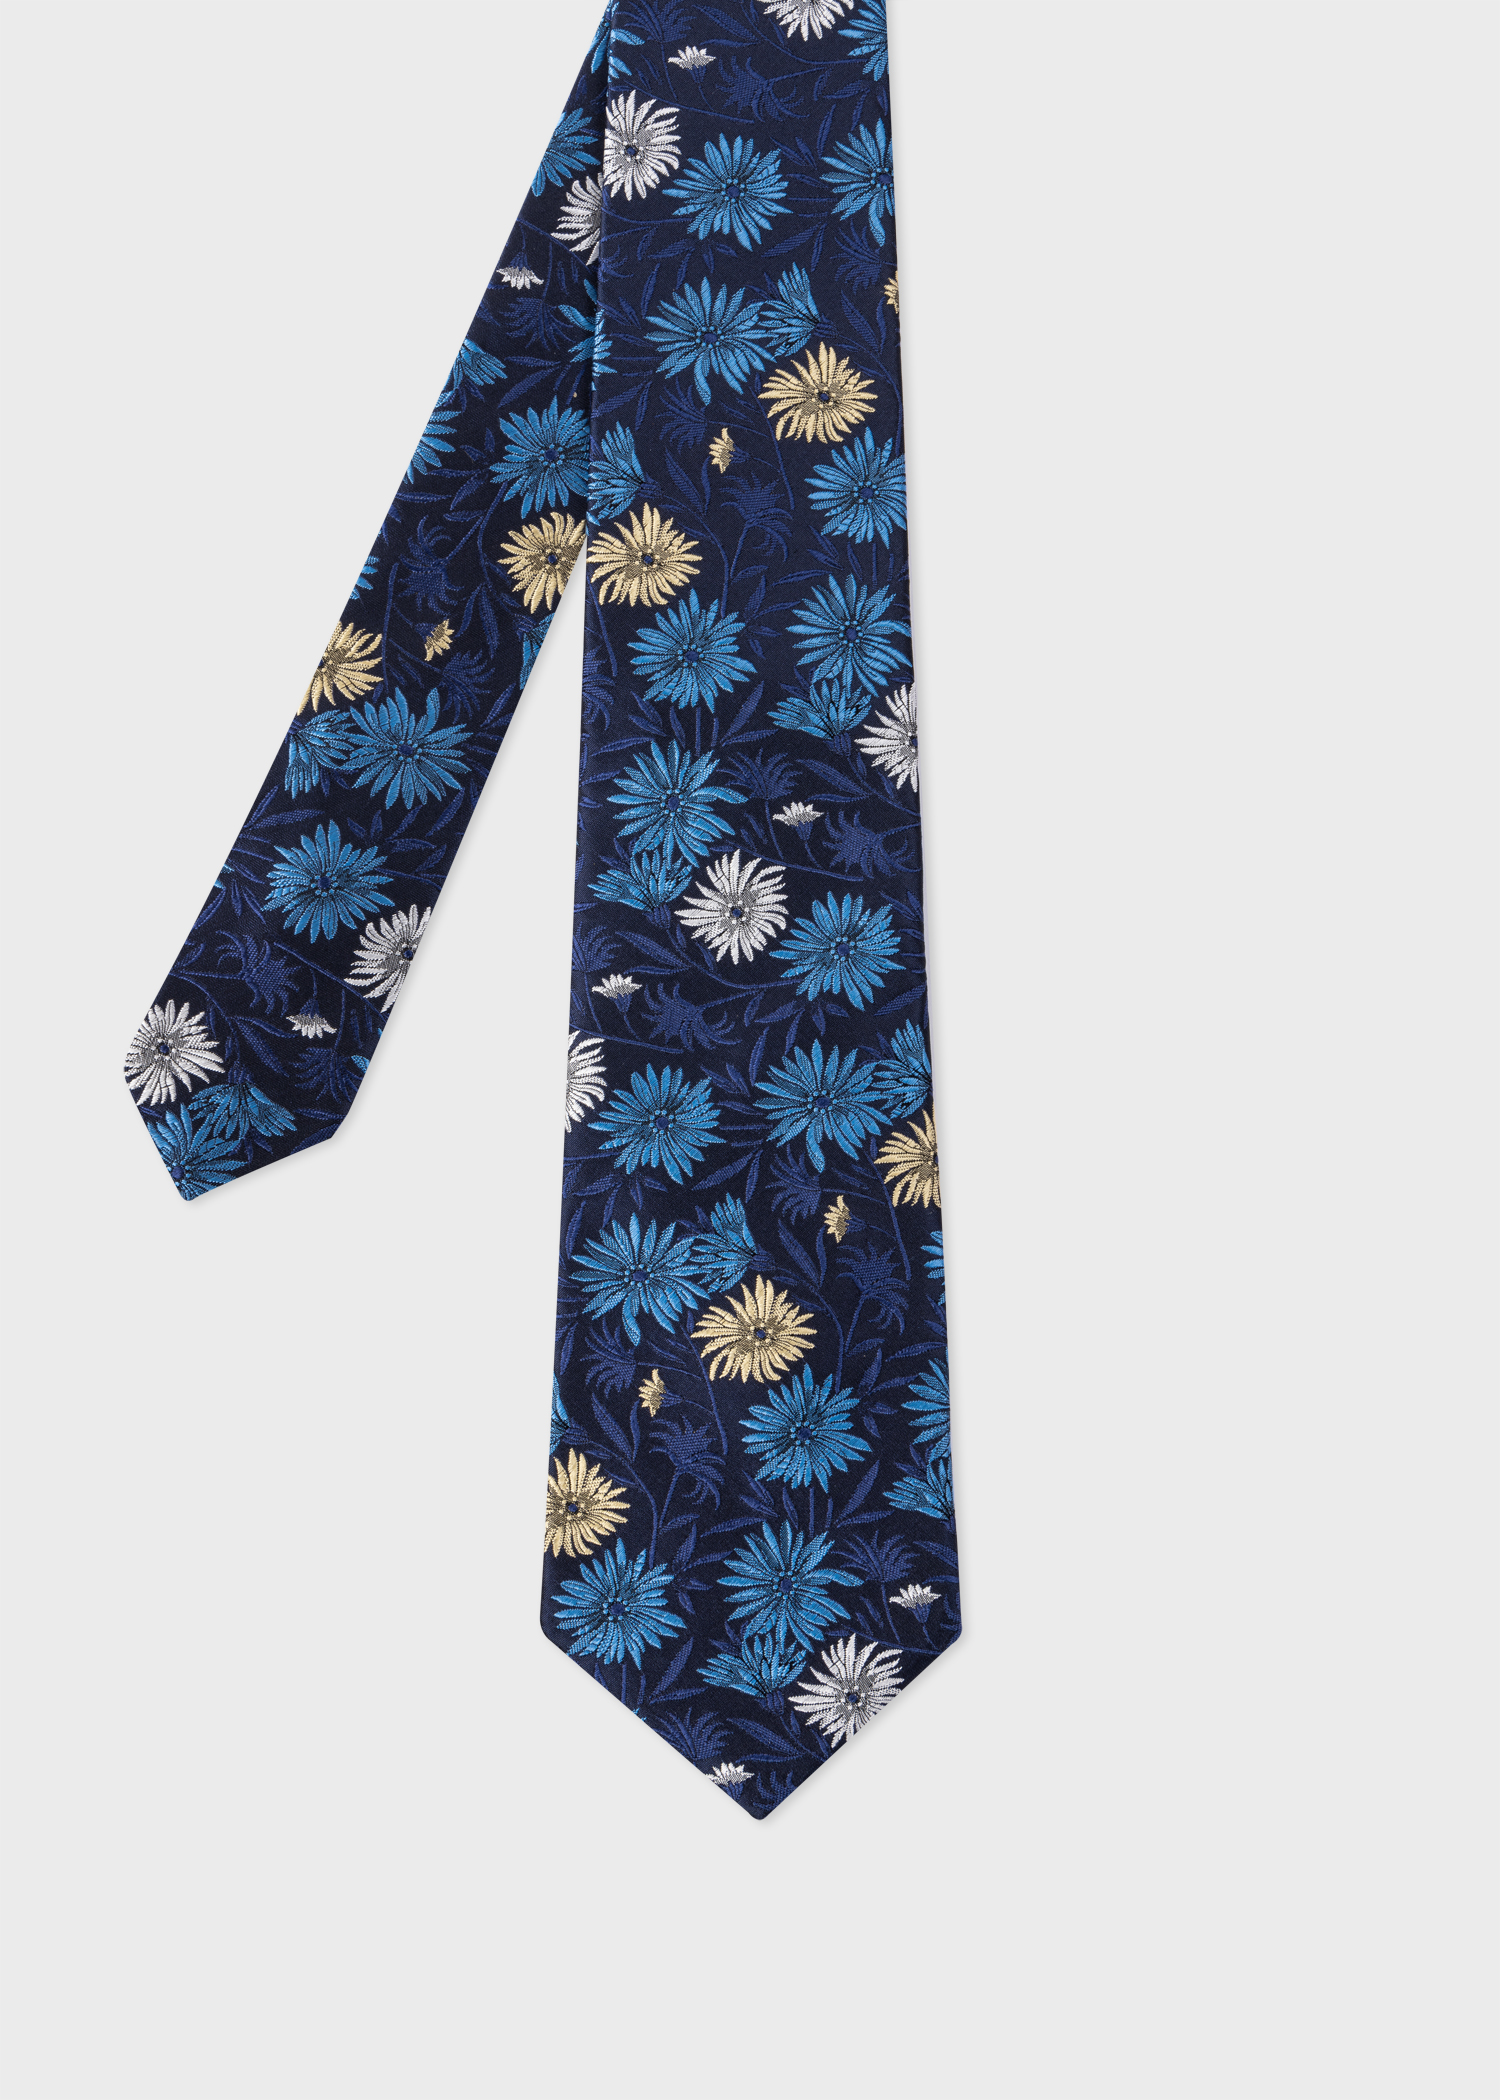 Men's Navy and Coral Floral Silk Tie